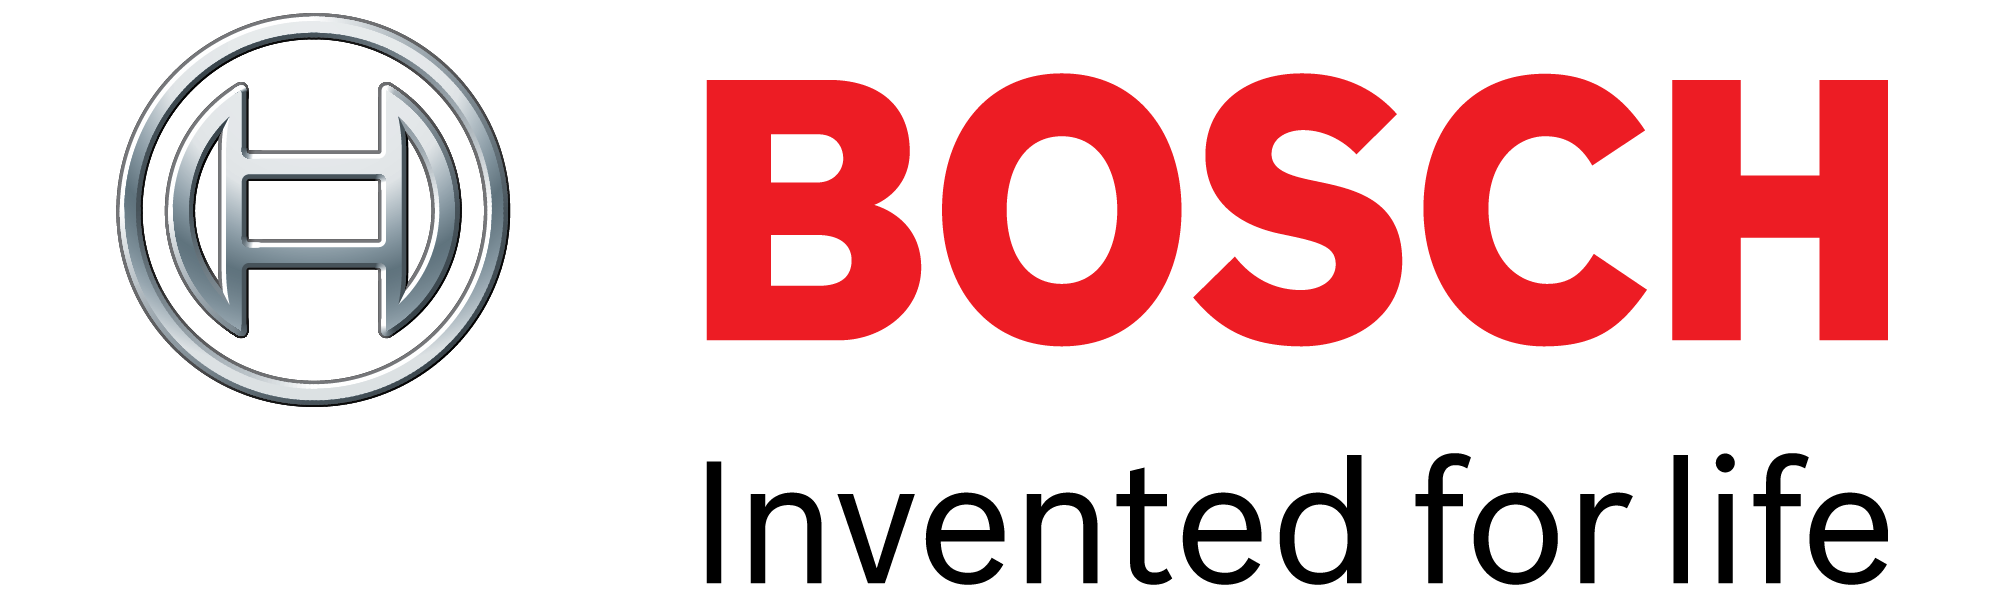 Bosch-logo-and-slogan.png